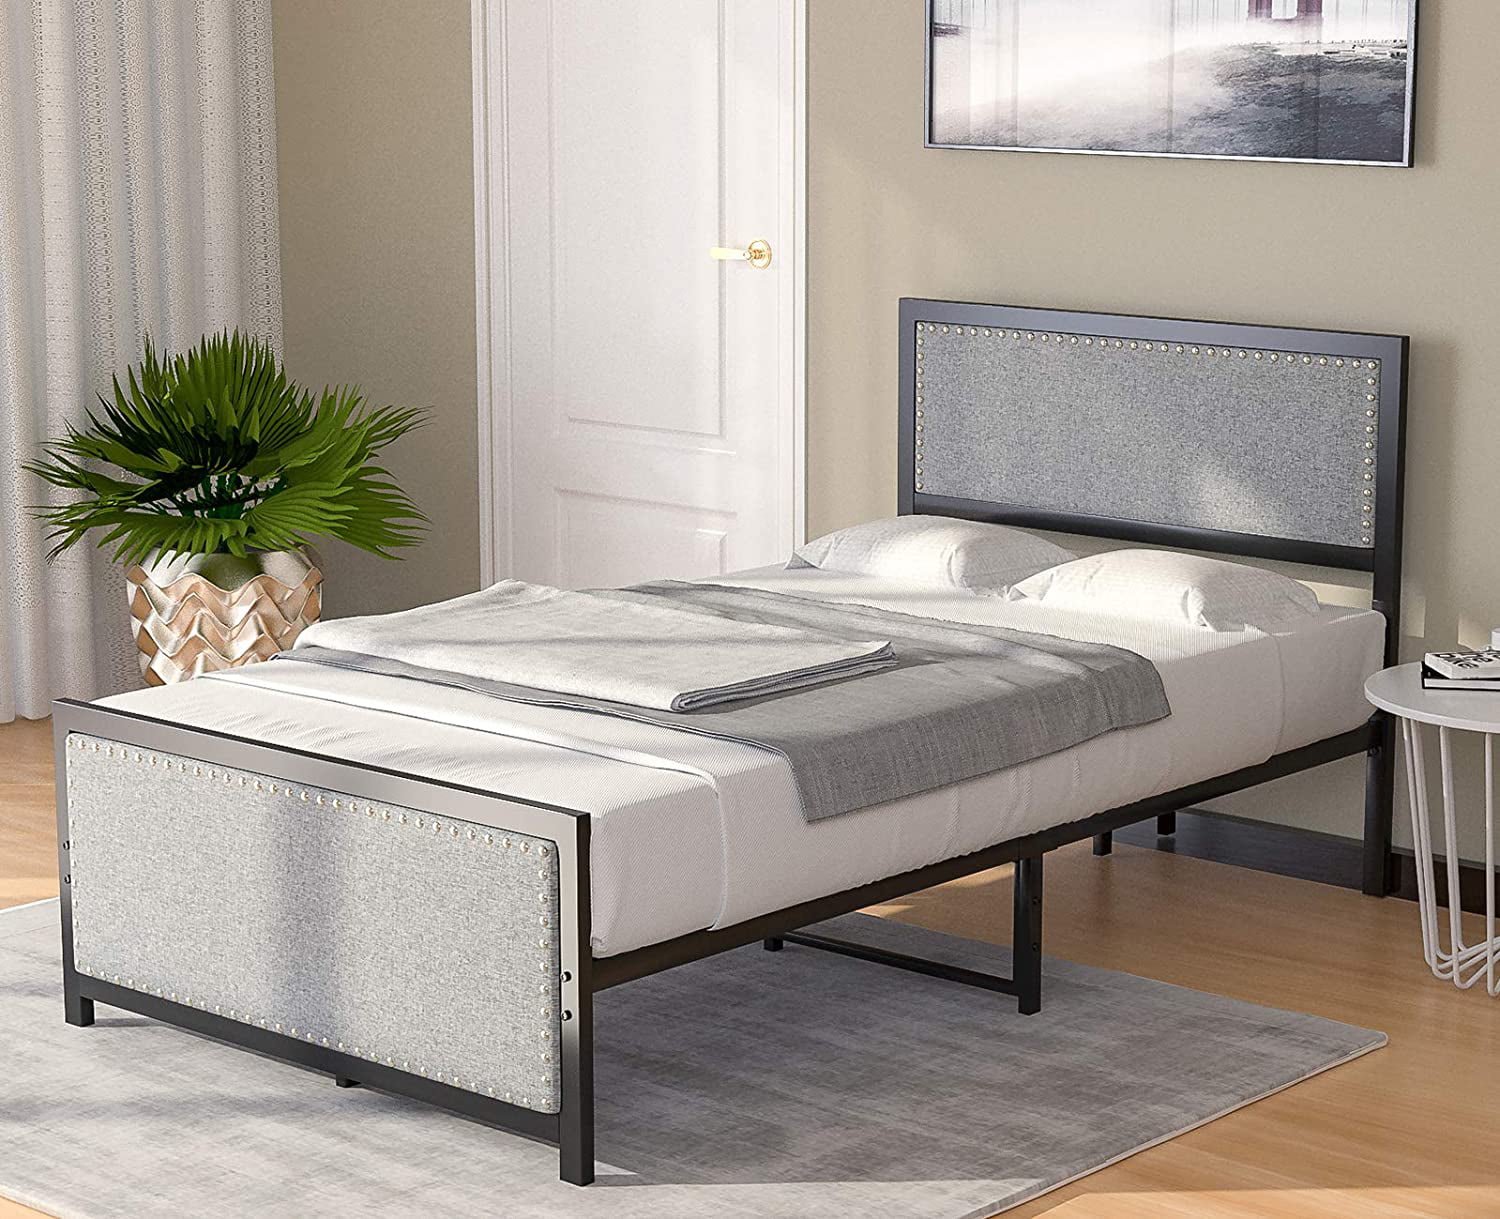 Mecor Metal Twin Platform Bed Frame, Grey Upholstered Headboard And Footboard